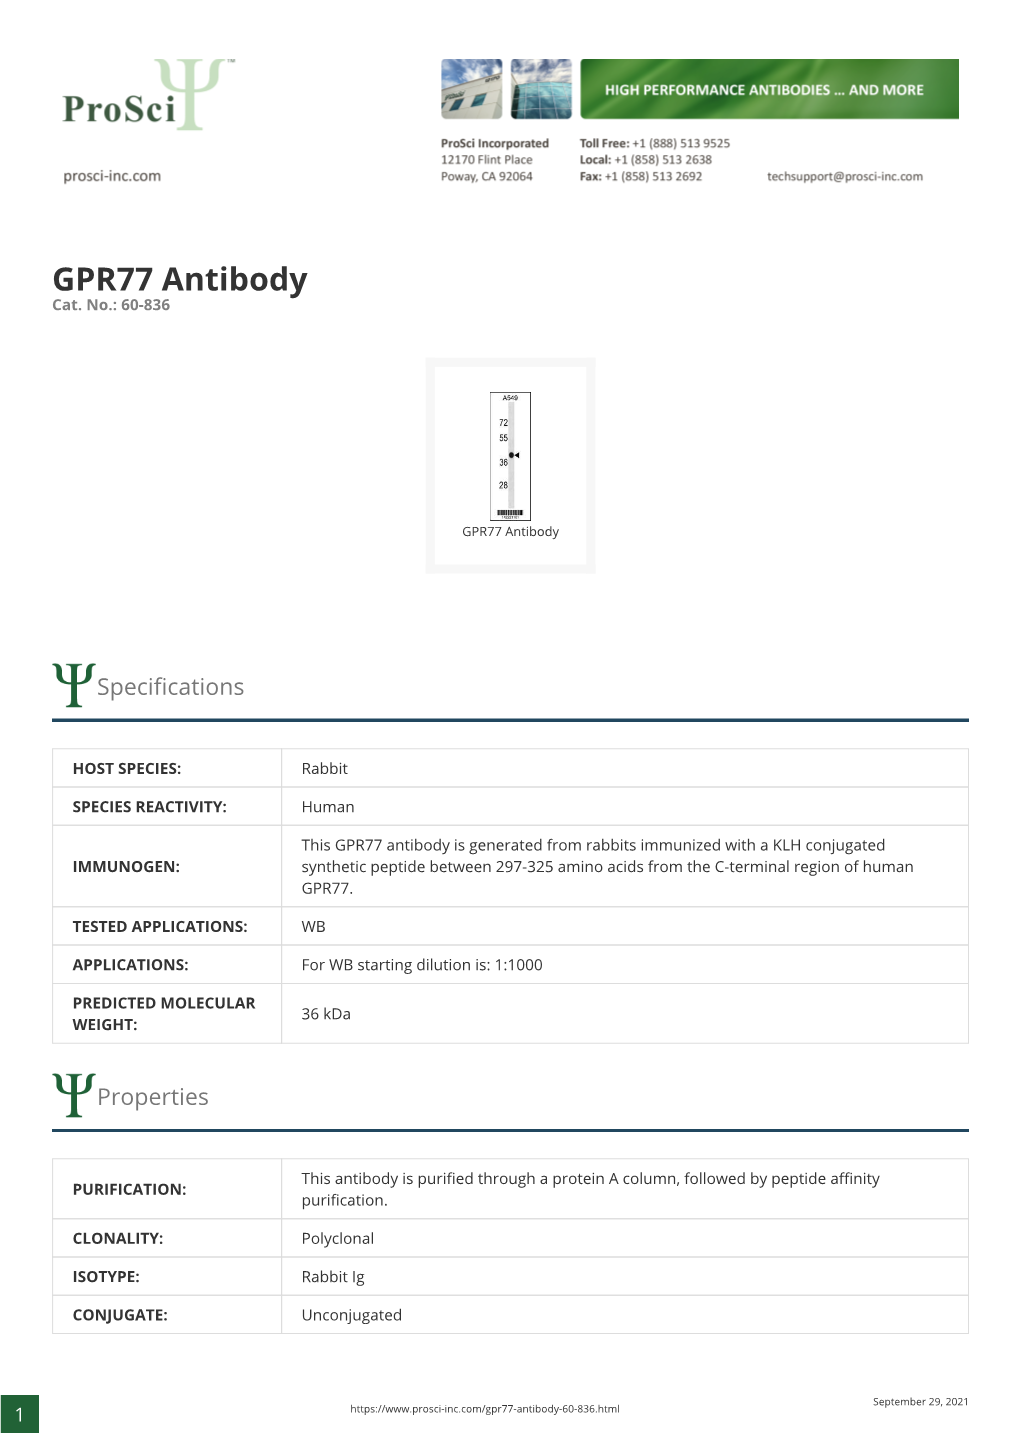 GPR77 Antibody Cat